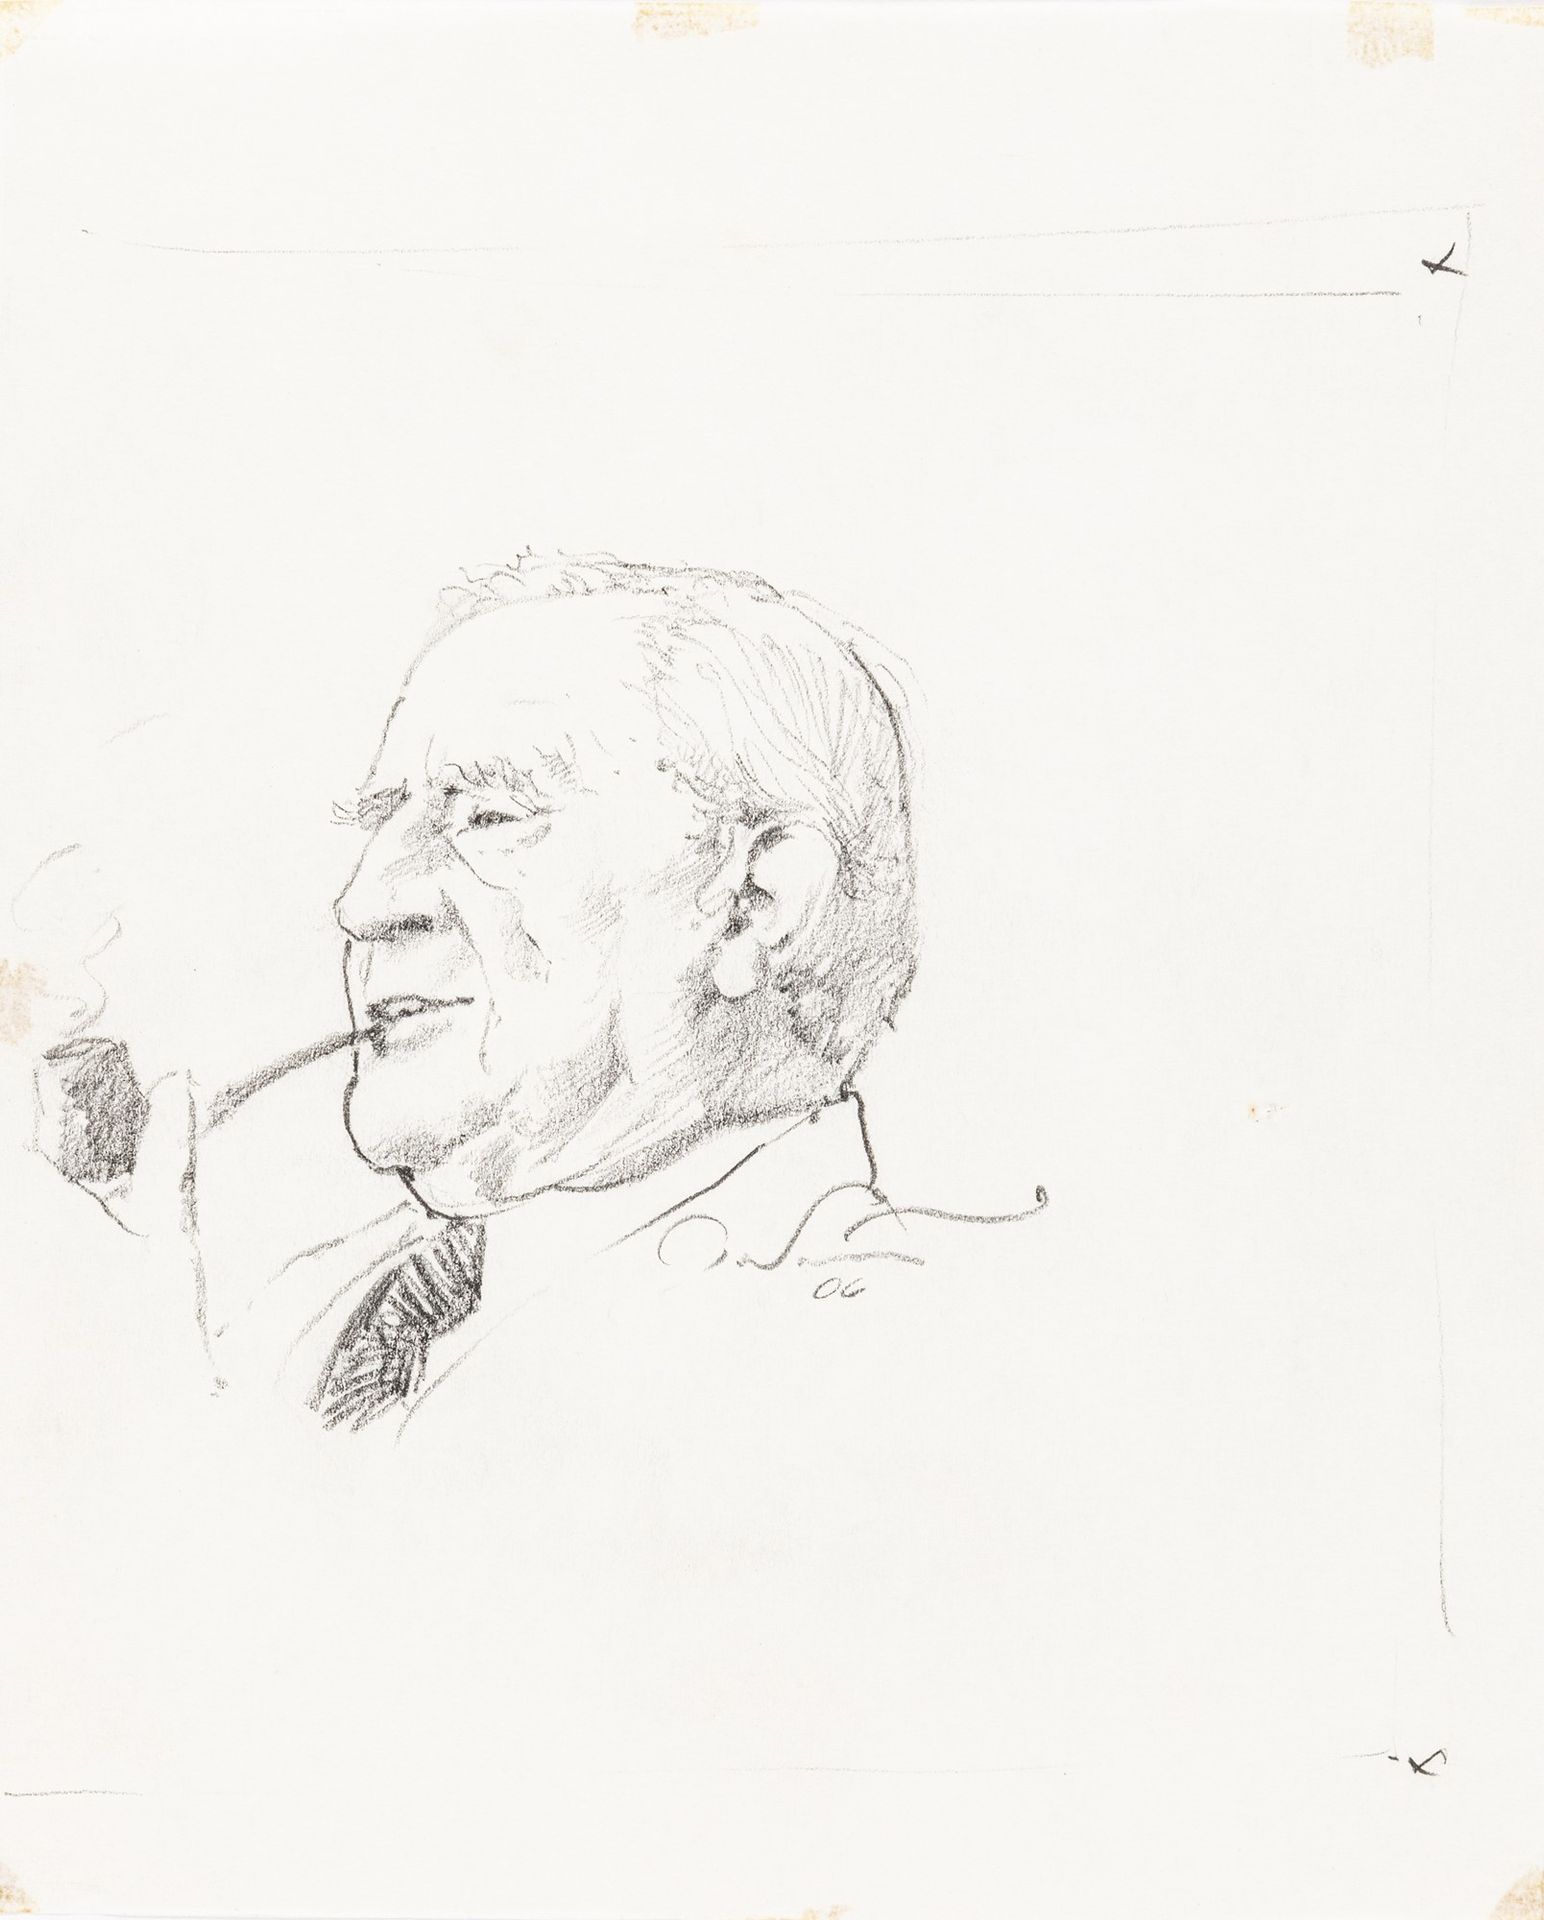 Ted Nasmith J.R.R. Tolkien, 2006

lápiz sobre papel
25,5 x 31 cm
Dibujo original&hellip;